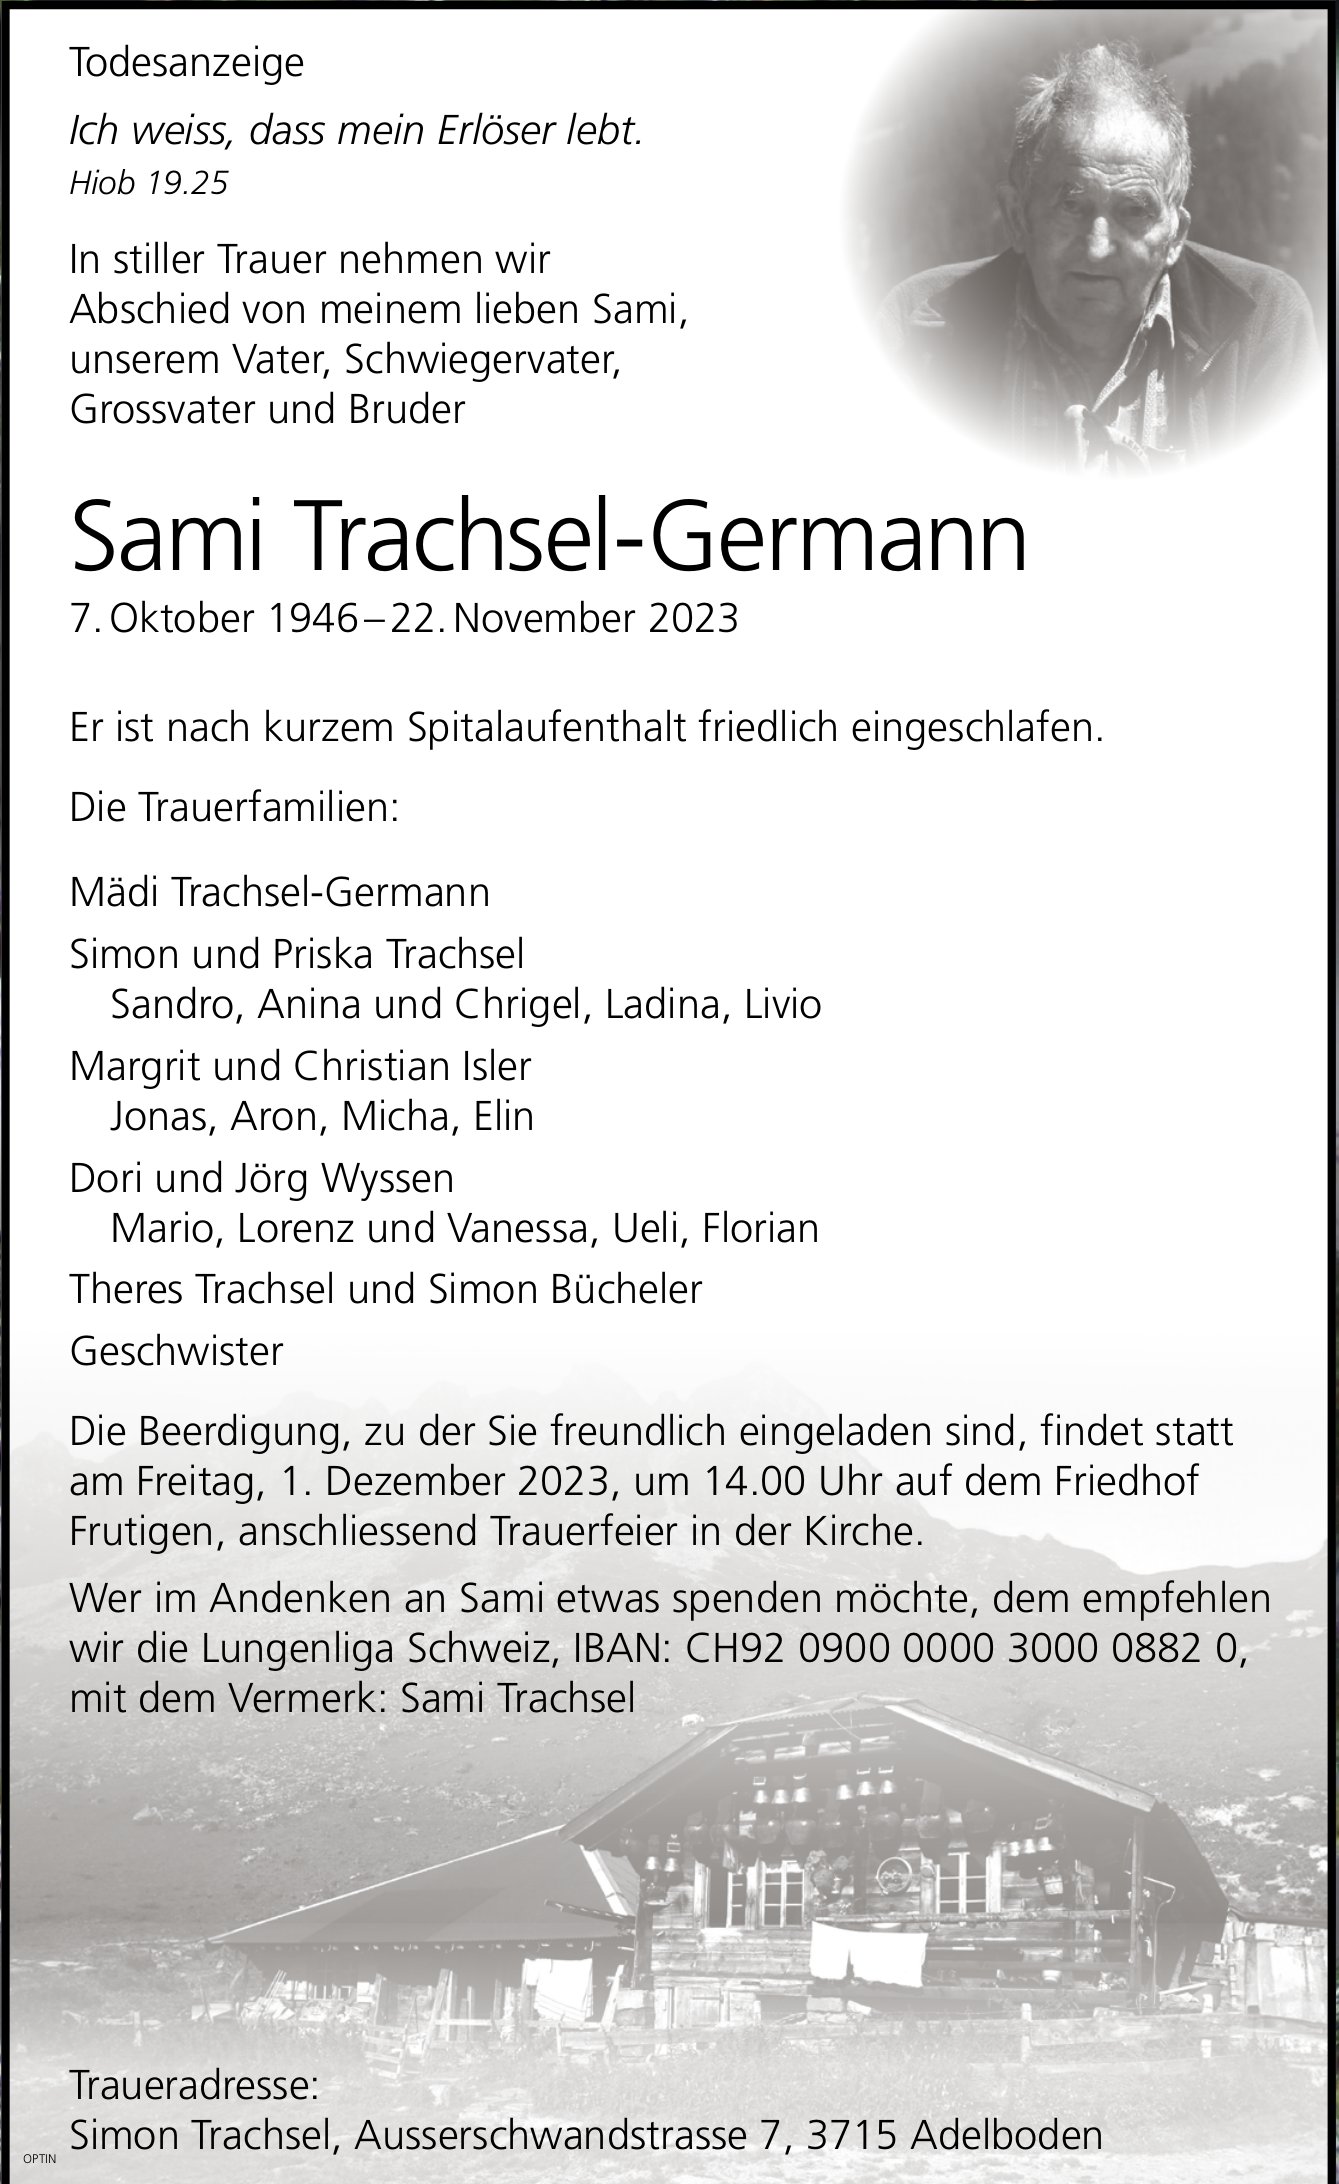 Sami Trachsel-Germann, November 2023 / TA